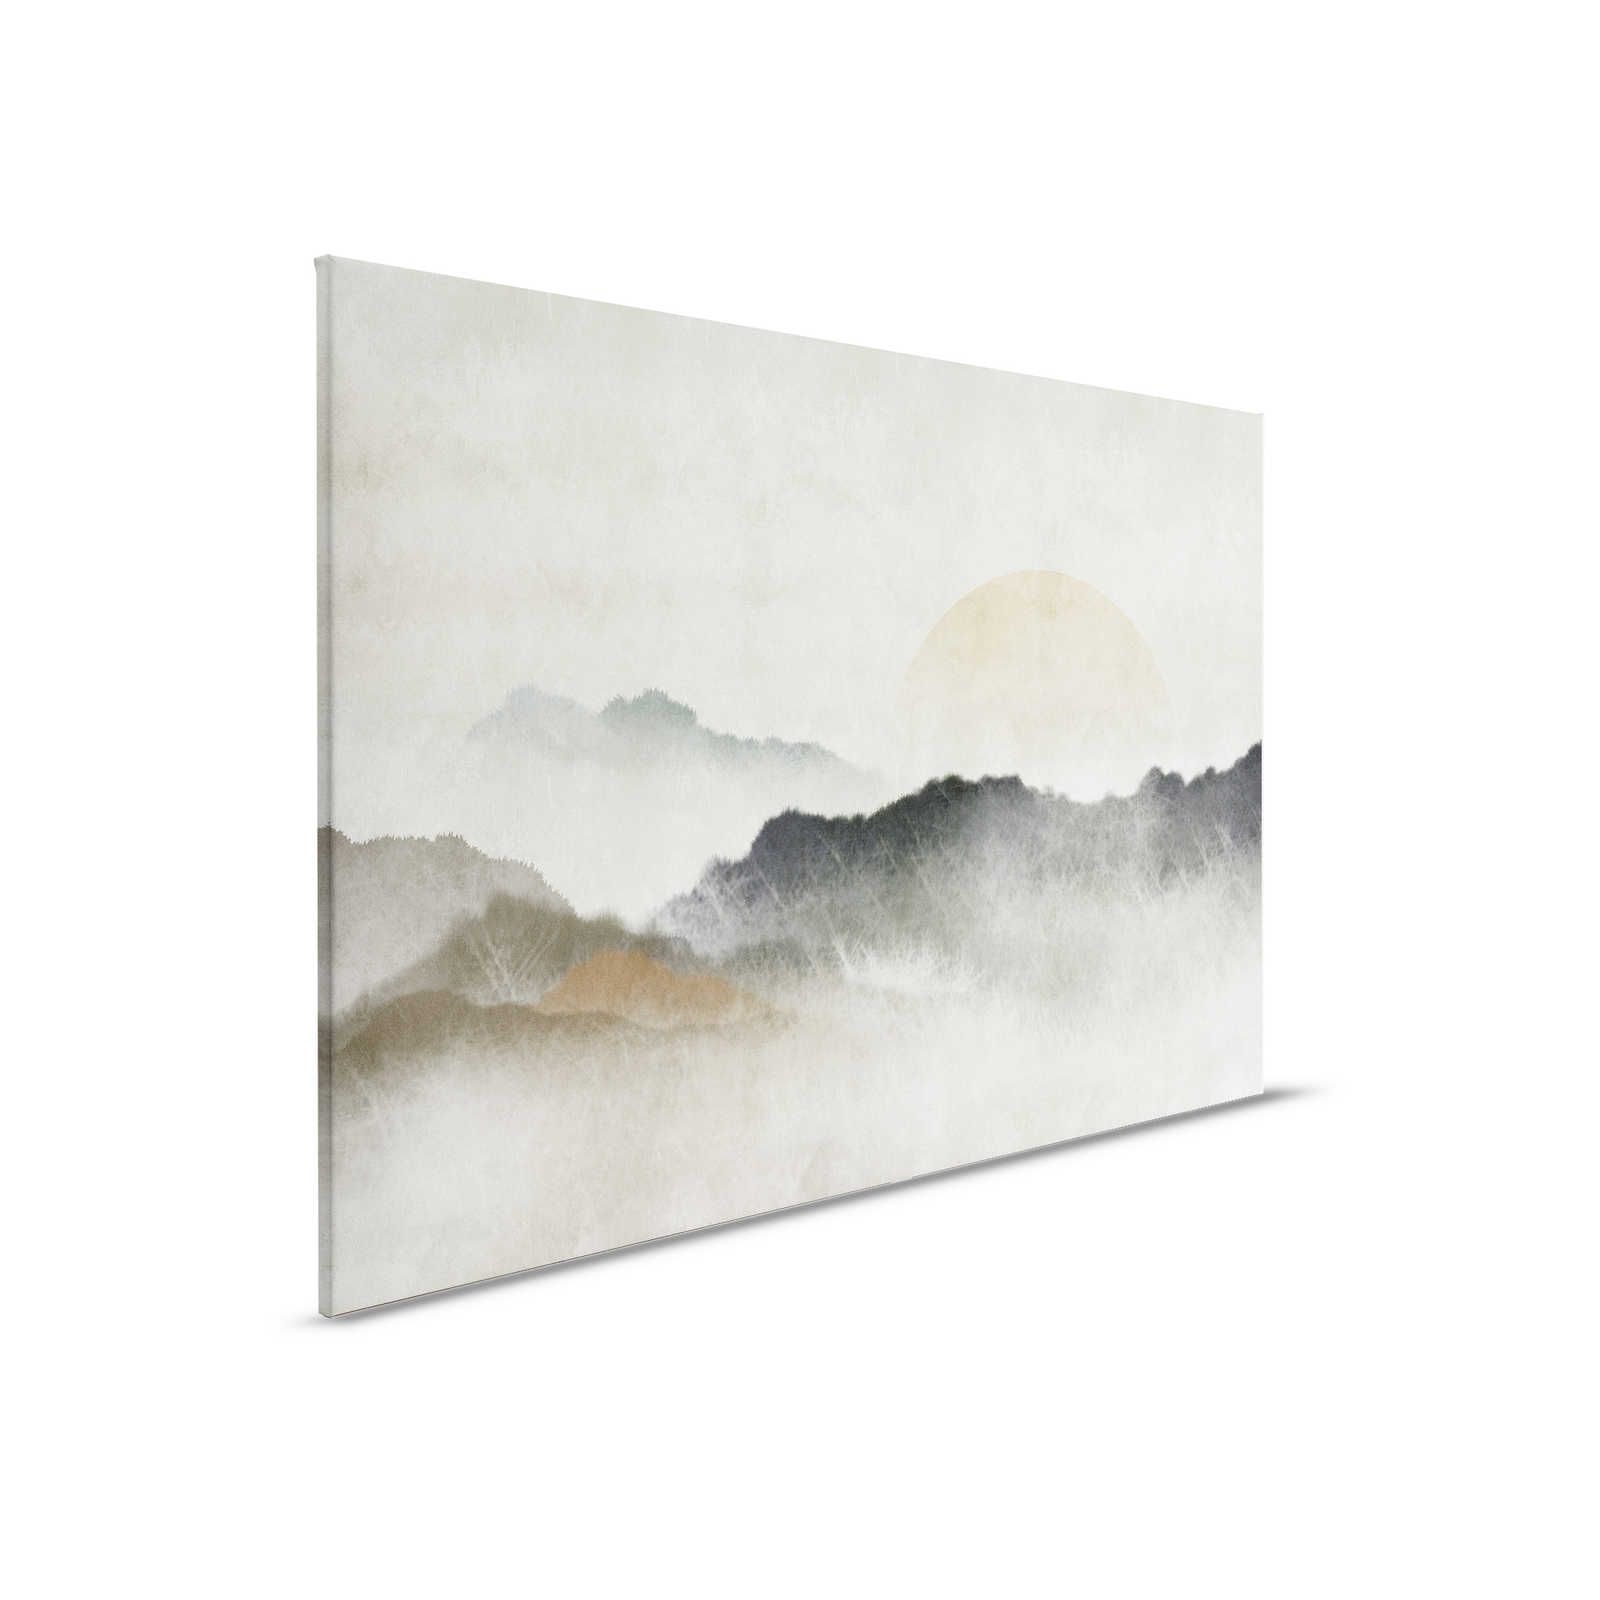         Akaishi 1 - Leinwandbild Asian Print Bergkette im Morgengrauen – 0,90 m x 0,60 m
    